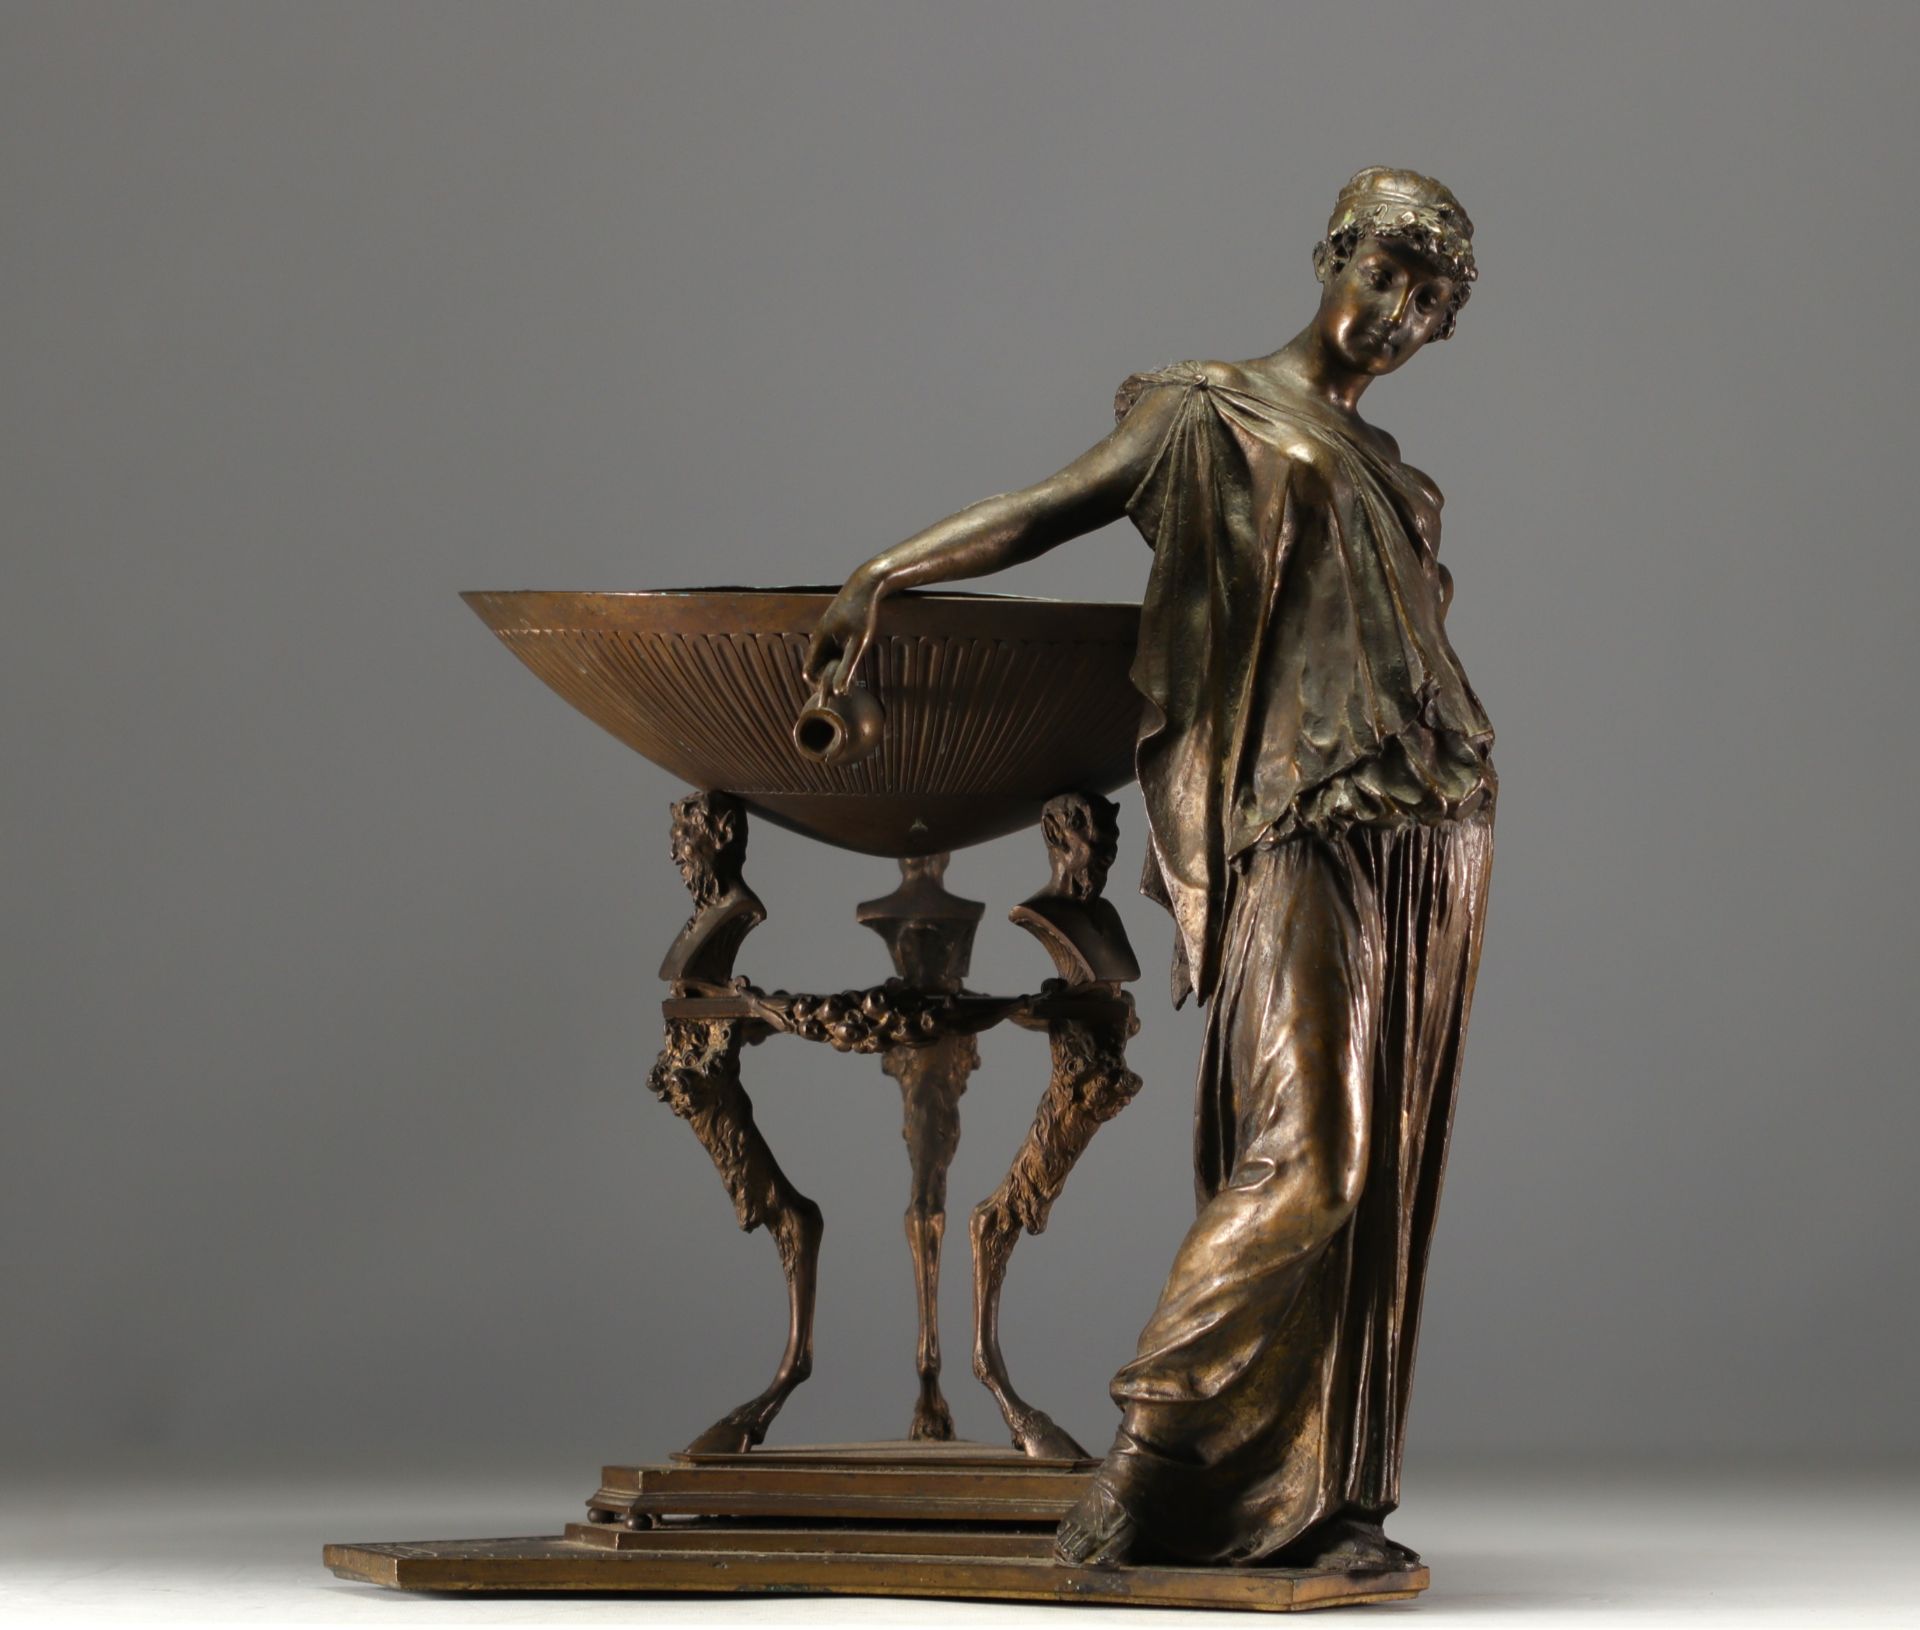 Arnoldo FAZZI (1855-1944) "Priestess of Vesta" Bronze sculpture, 19th century.